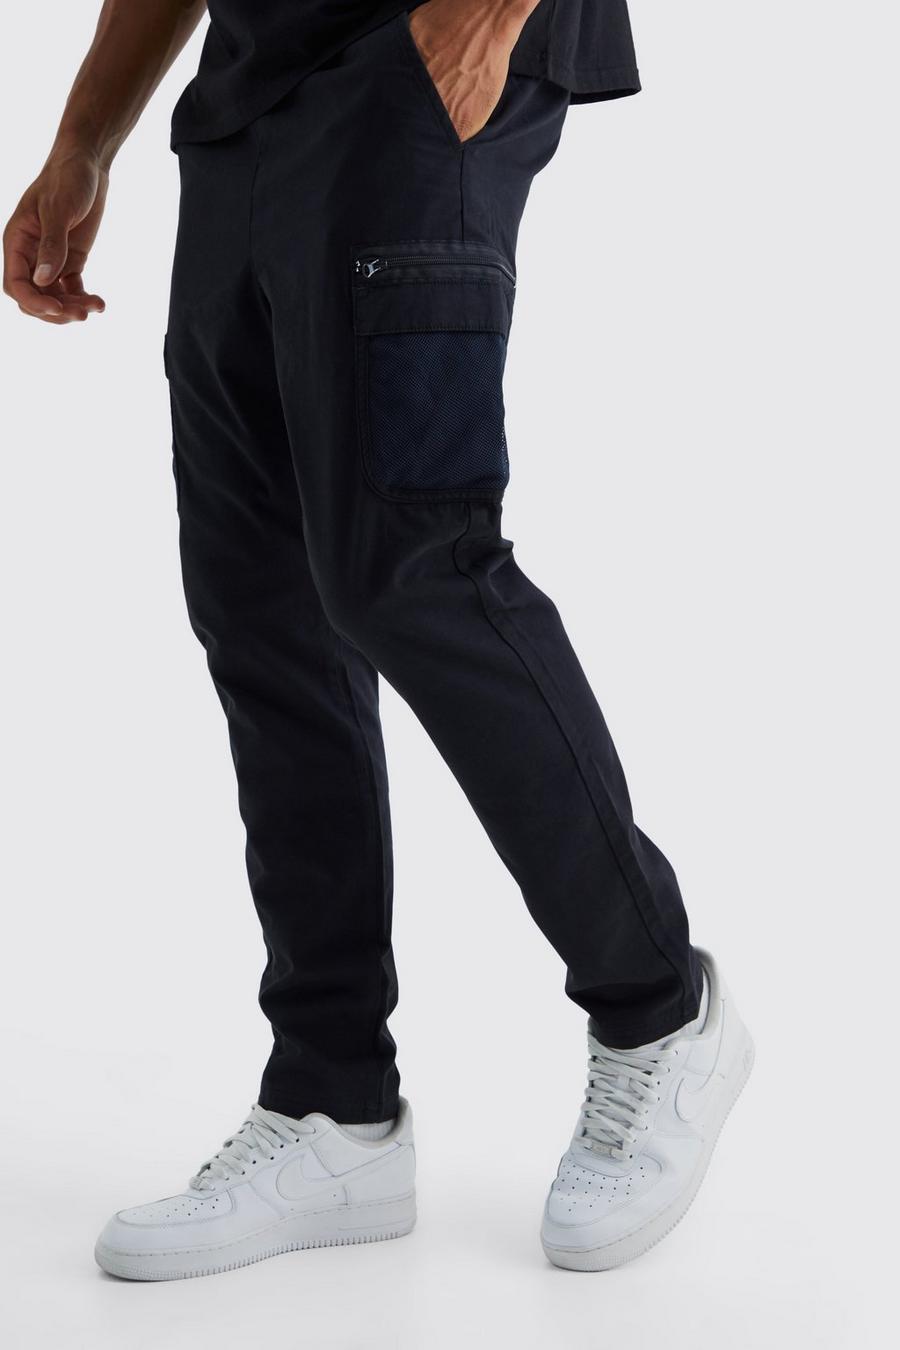 Black Tall Elastic Comfort Mesh Pocket Cargo Pants image number 1